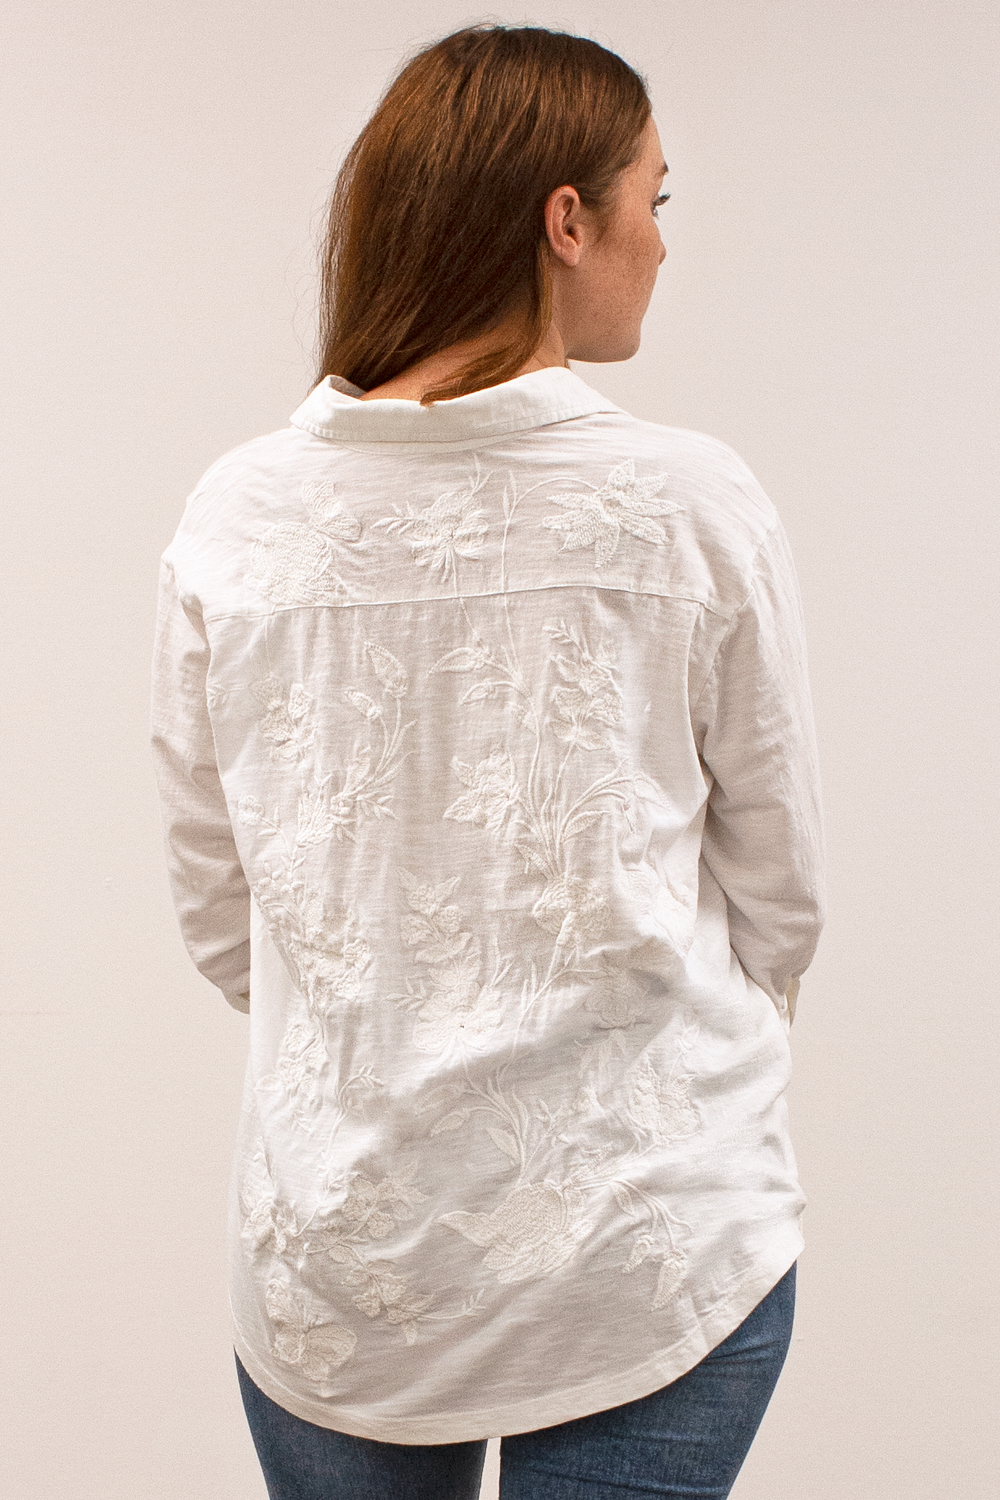 Caite Marcela shirt, embroidered back